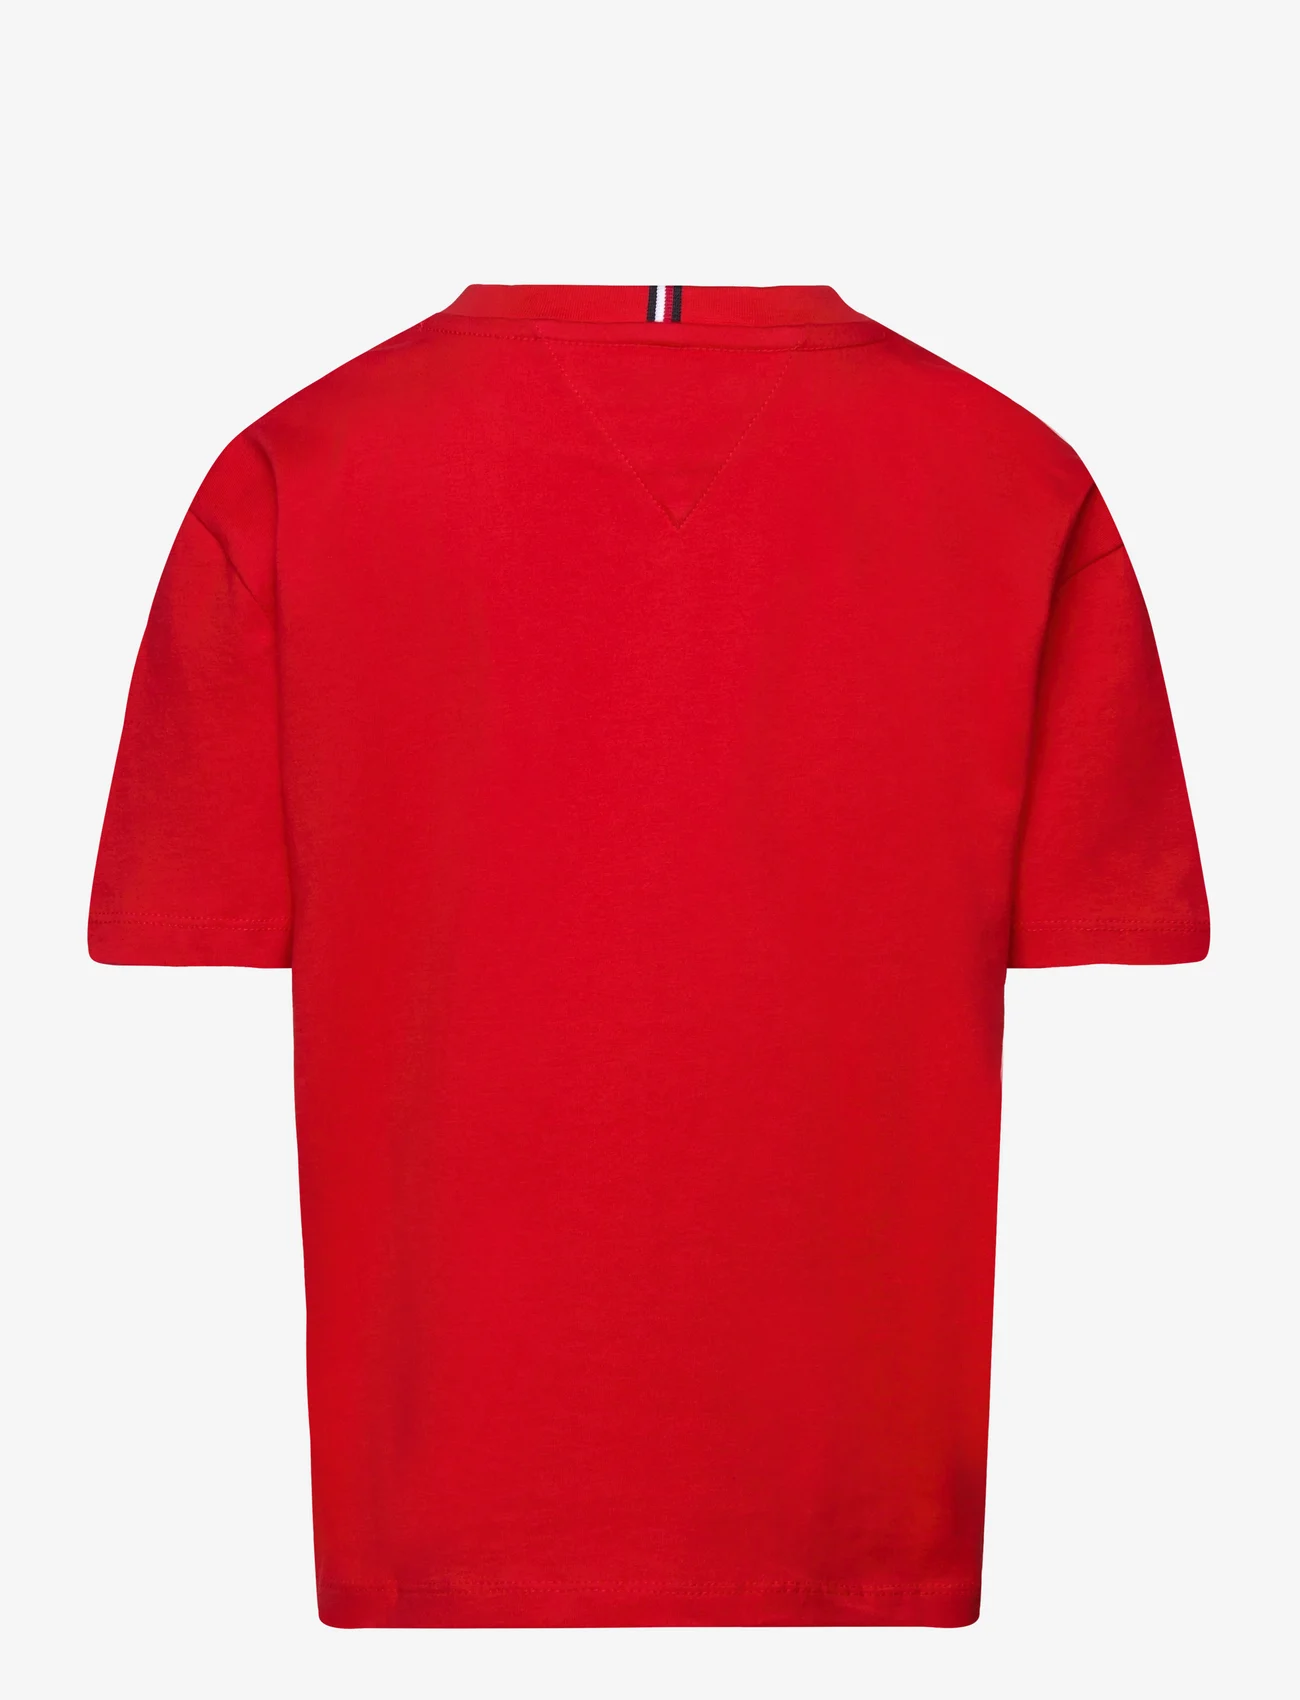 Tommy Hilfiger - ESSENTIAL TEE SS - kortermede t-skjorter - fierce red - 1